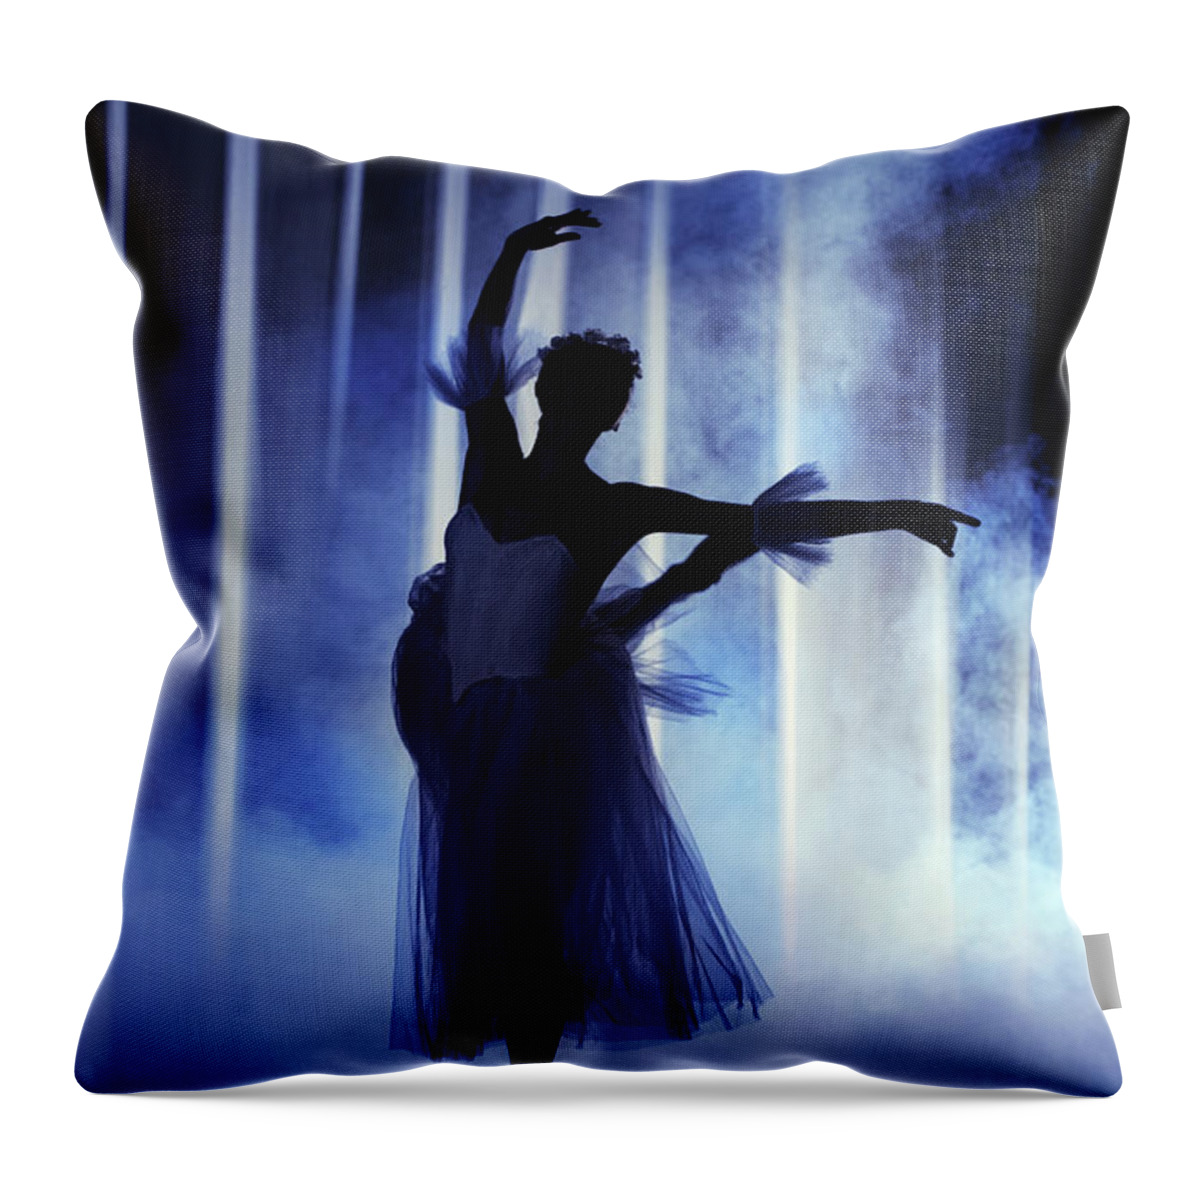 Ballet Dancer Throw Pillow featuring the photograph Classical Dancer #7 by Oleg66